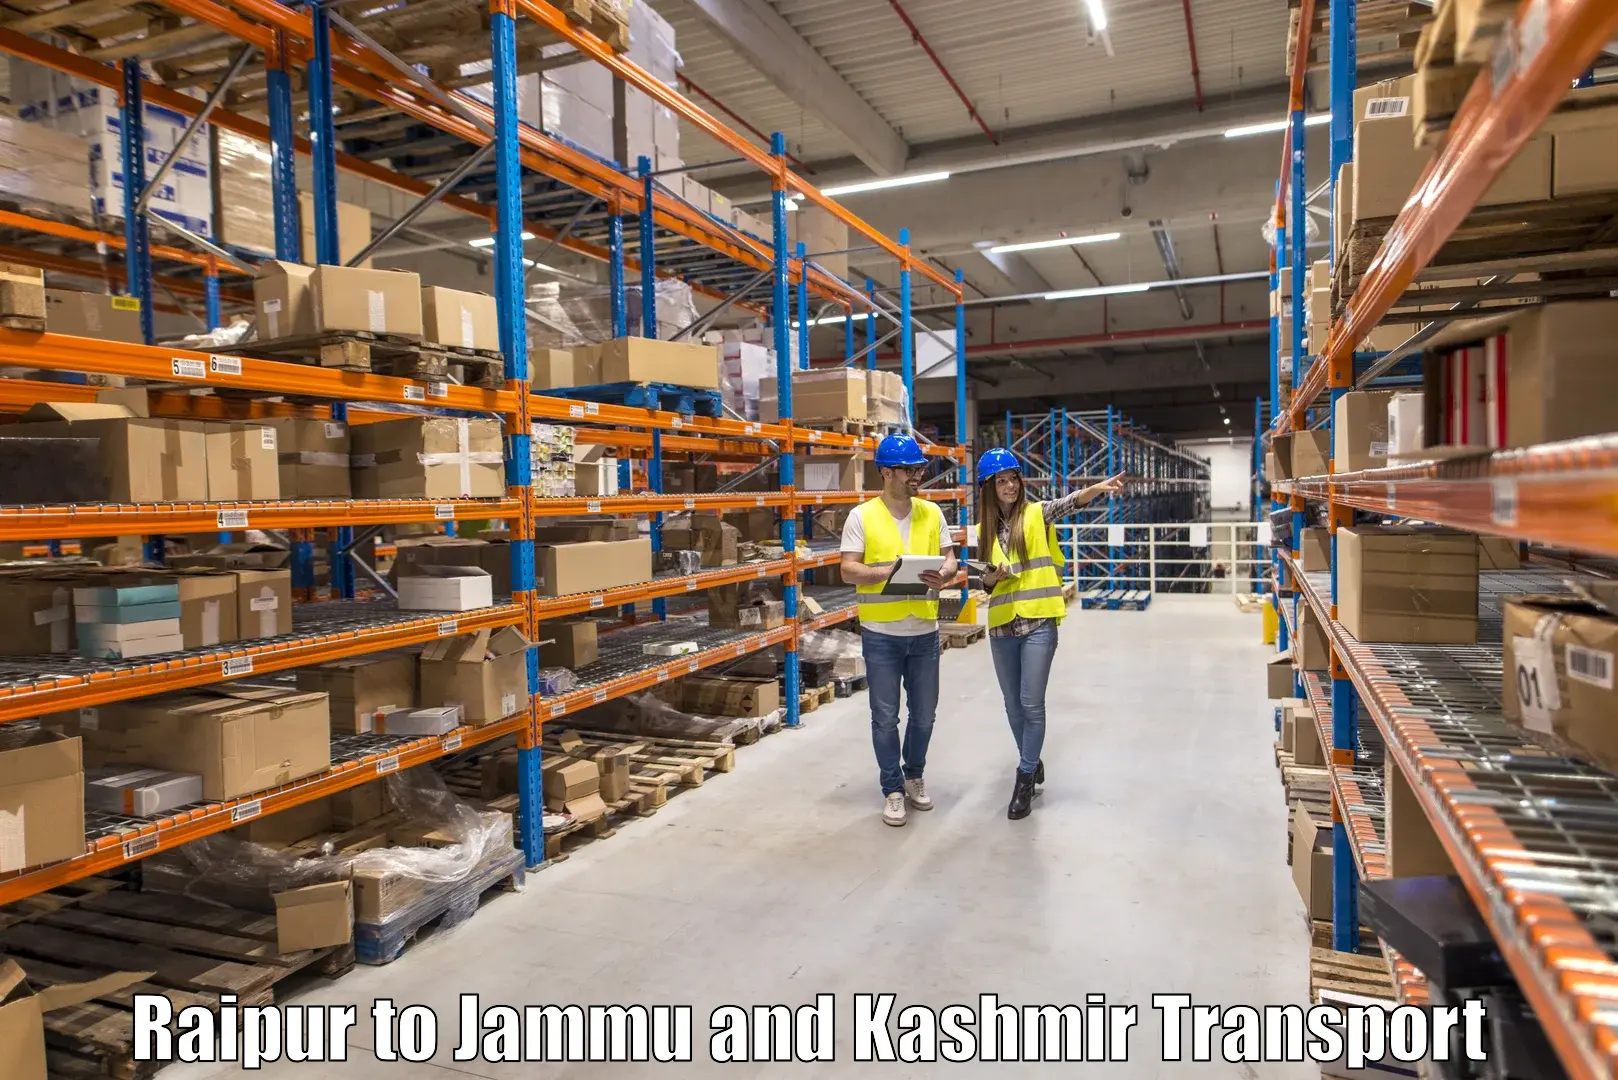 Truck transport companies in India in Raipur to Leh